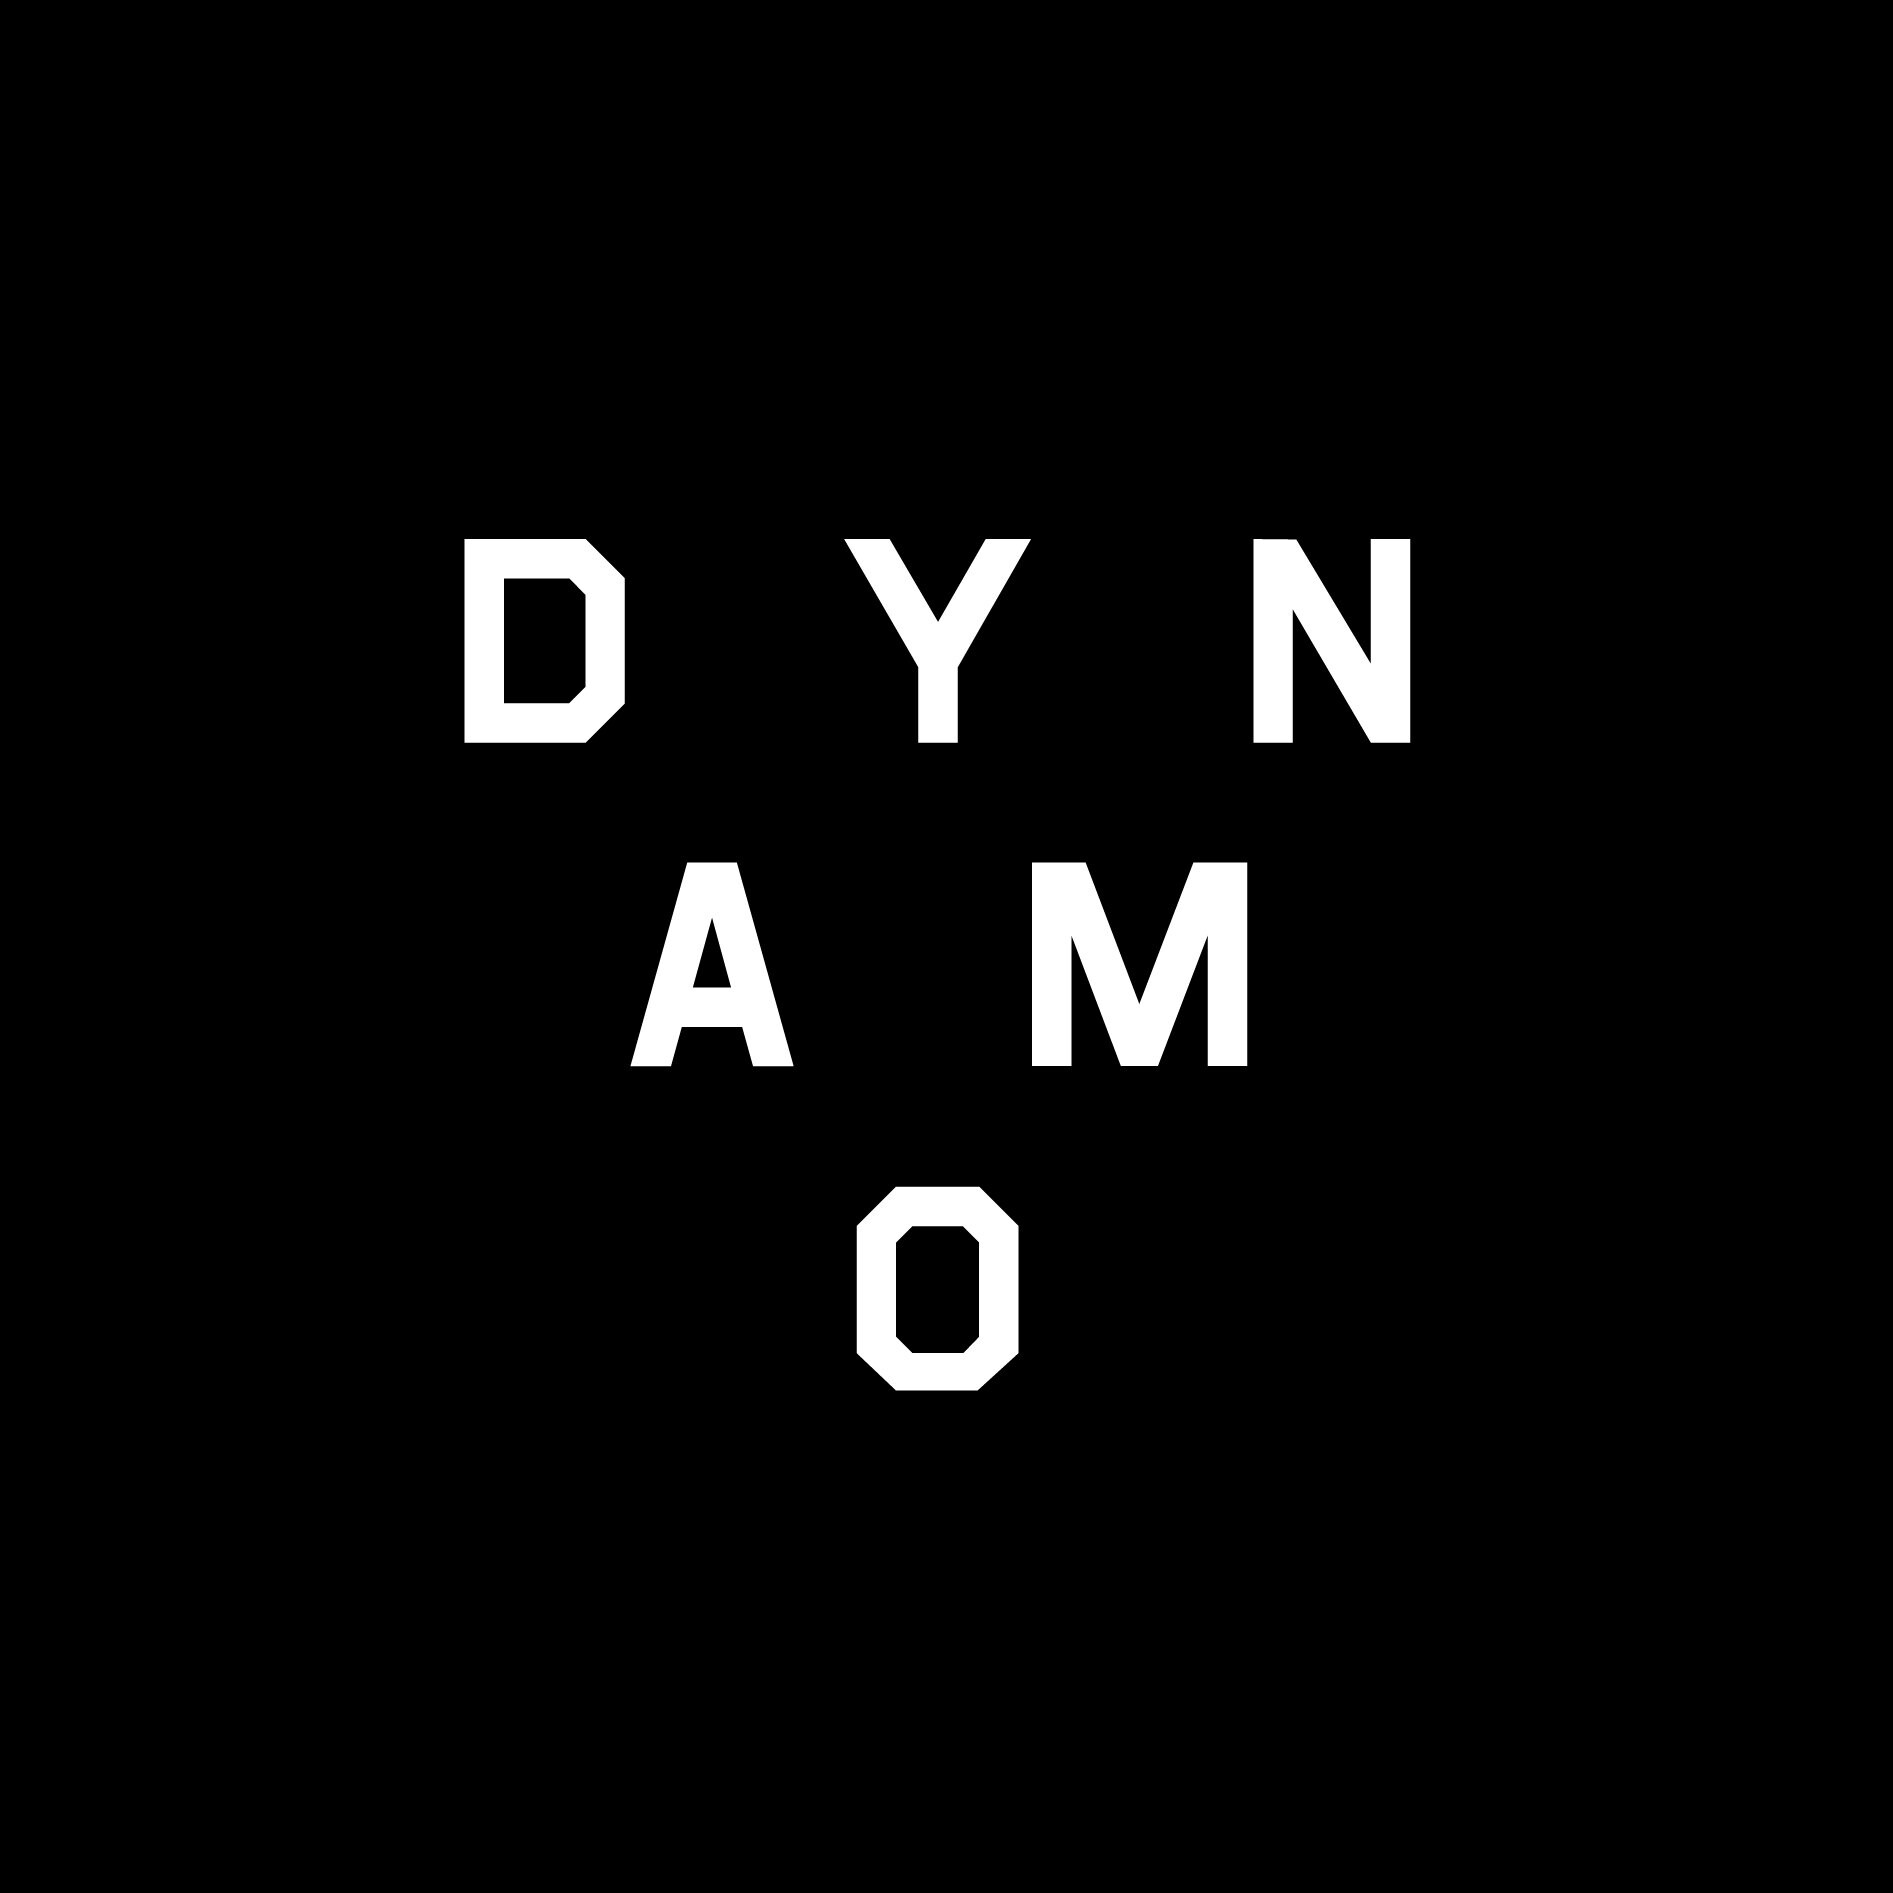 Dynamo